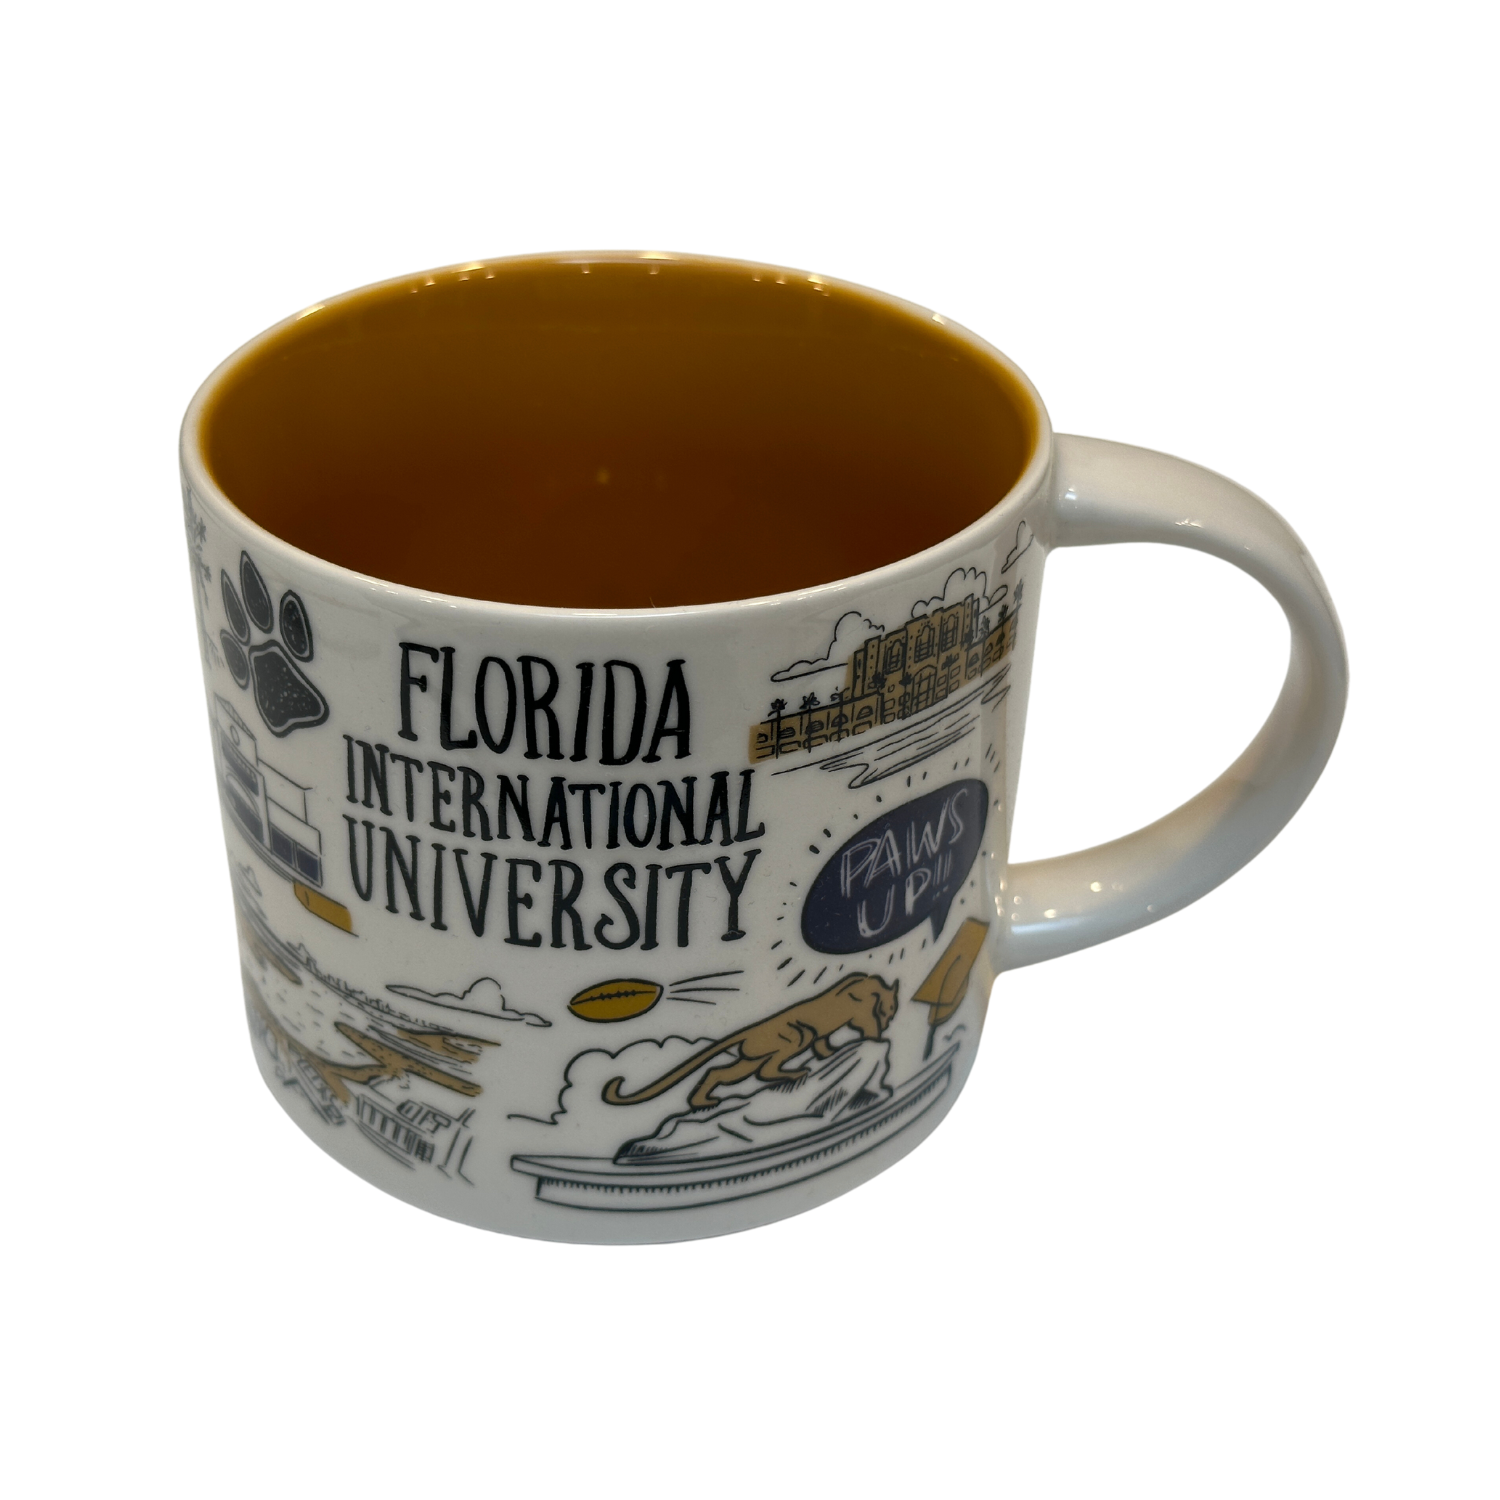 Starbucks Been There Series Campus Collection Florida International University Ceramic Coffee Mug, 14 Oz